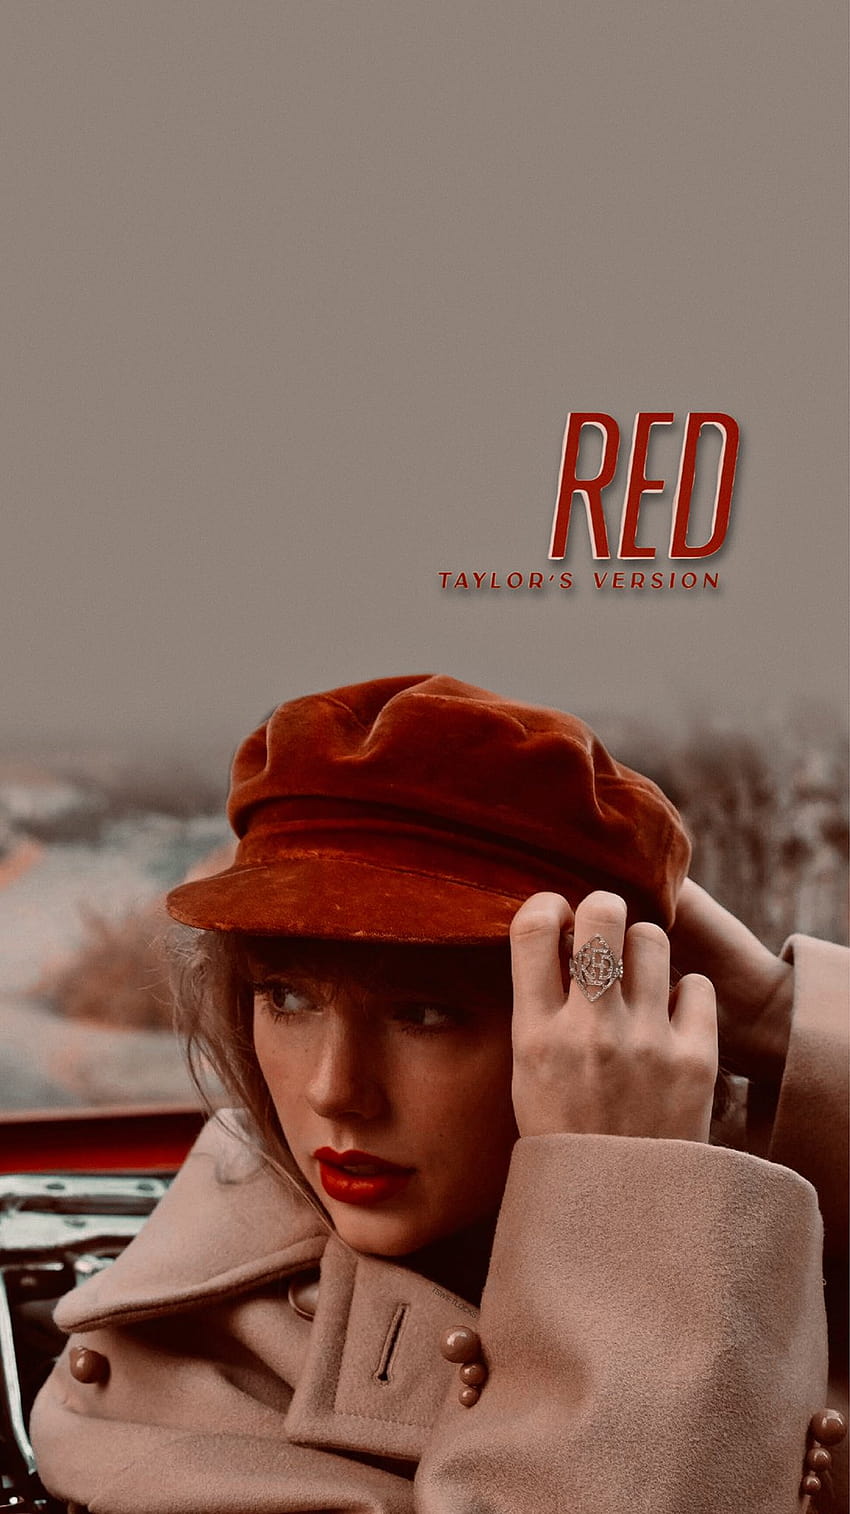 Red Taylor's Version, taylors version HD phone wallpaper